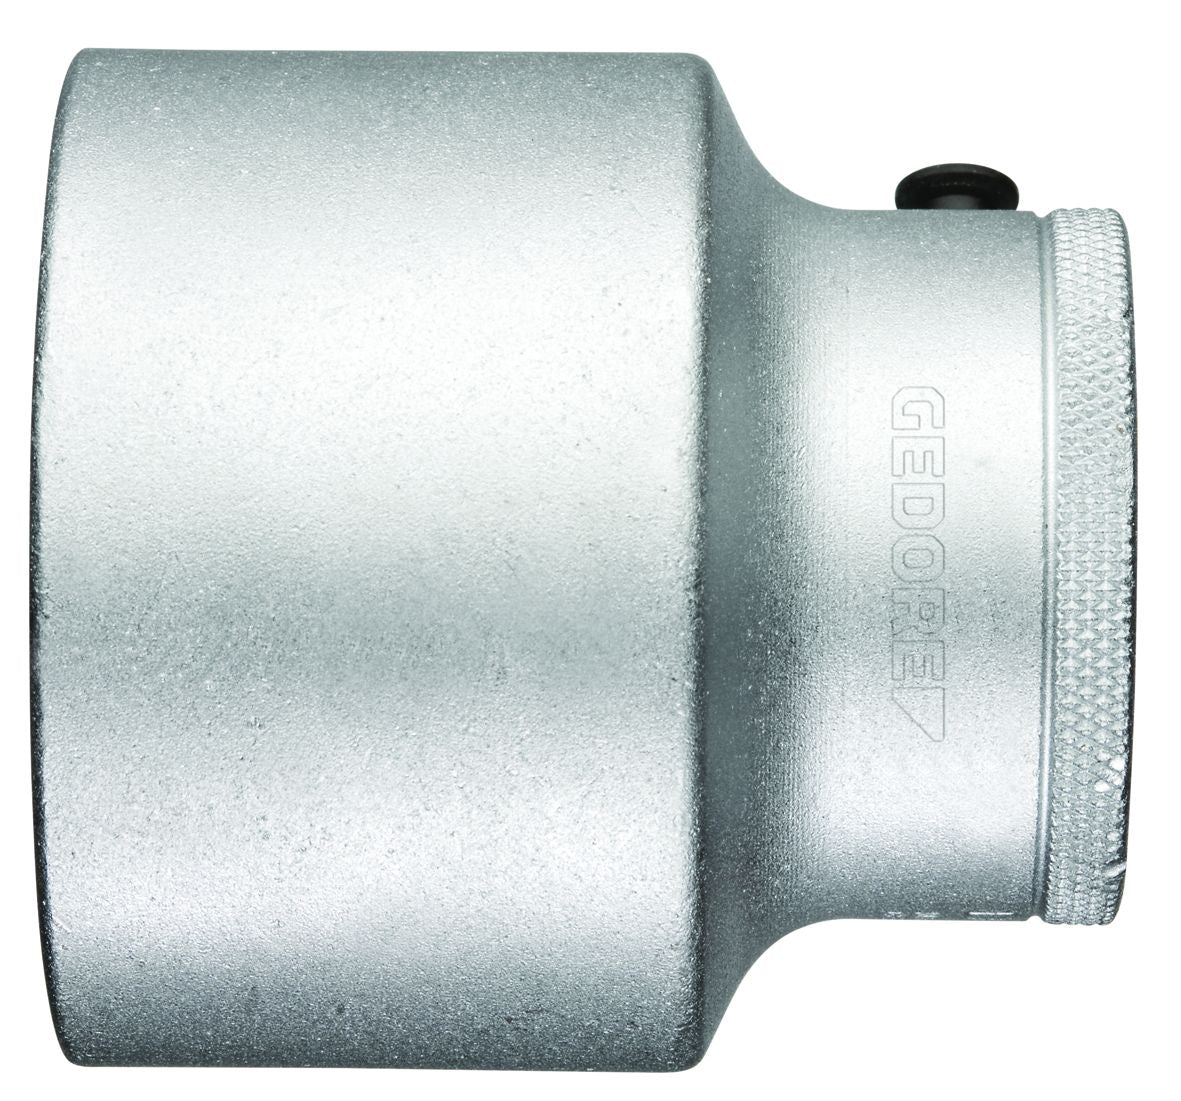 GEDORE D 32 60 - Unit Drive Socket 3/4", 60 mm (6273560)